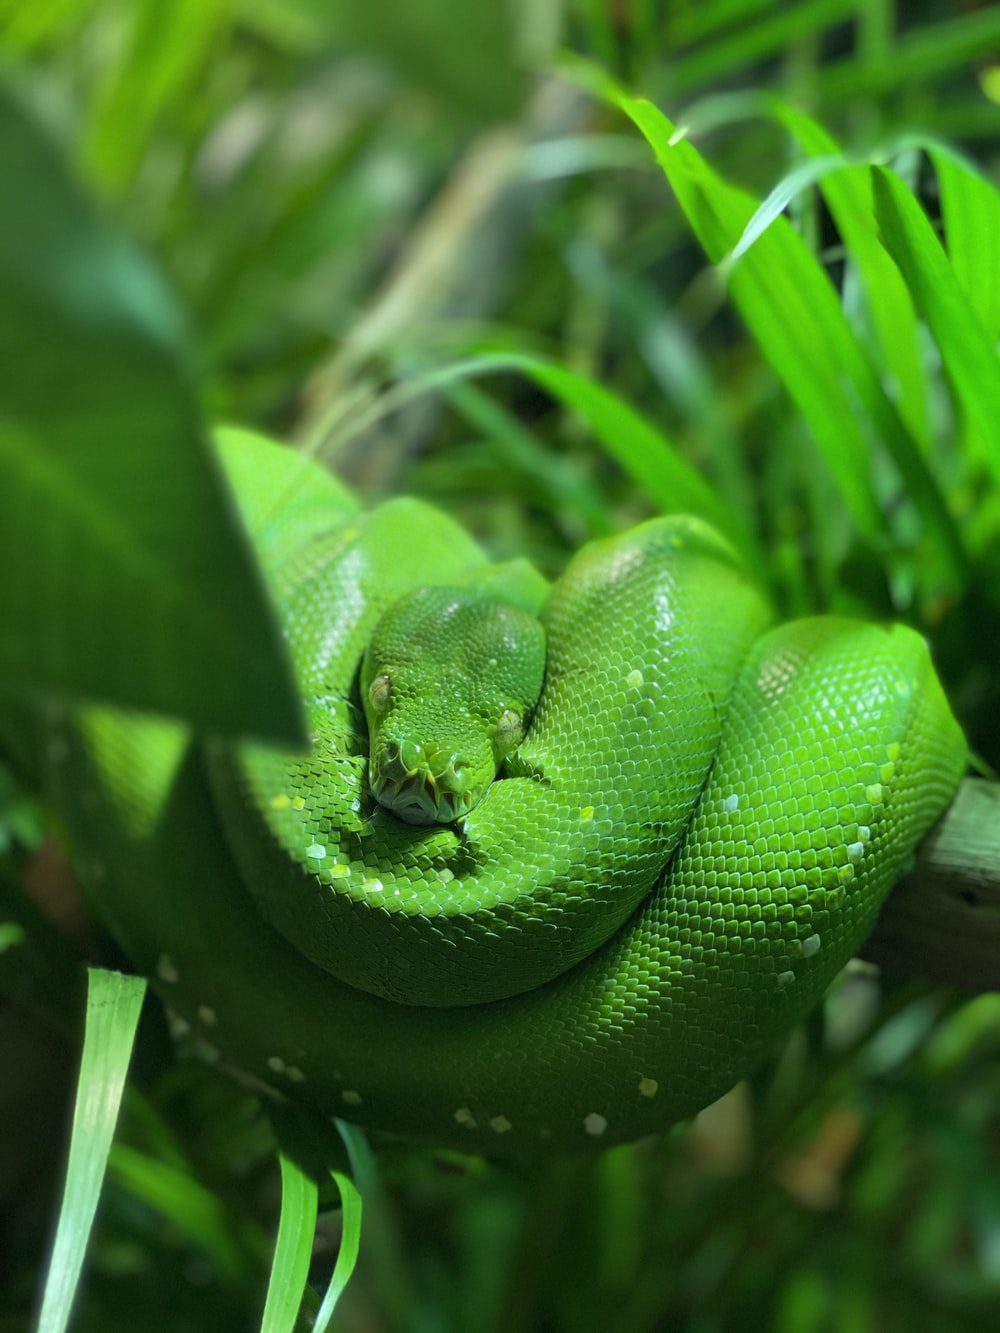 green snake on tree branch photo